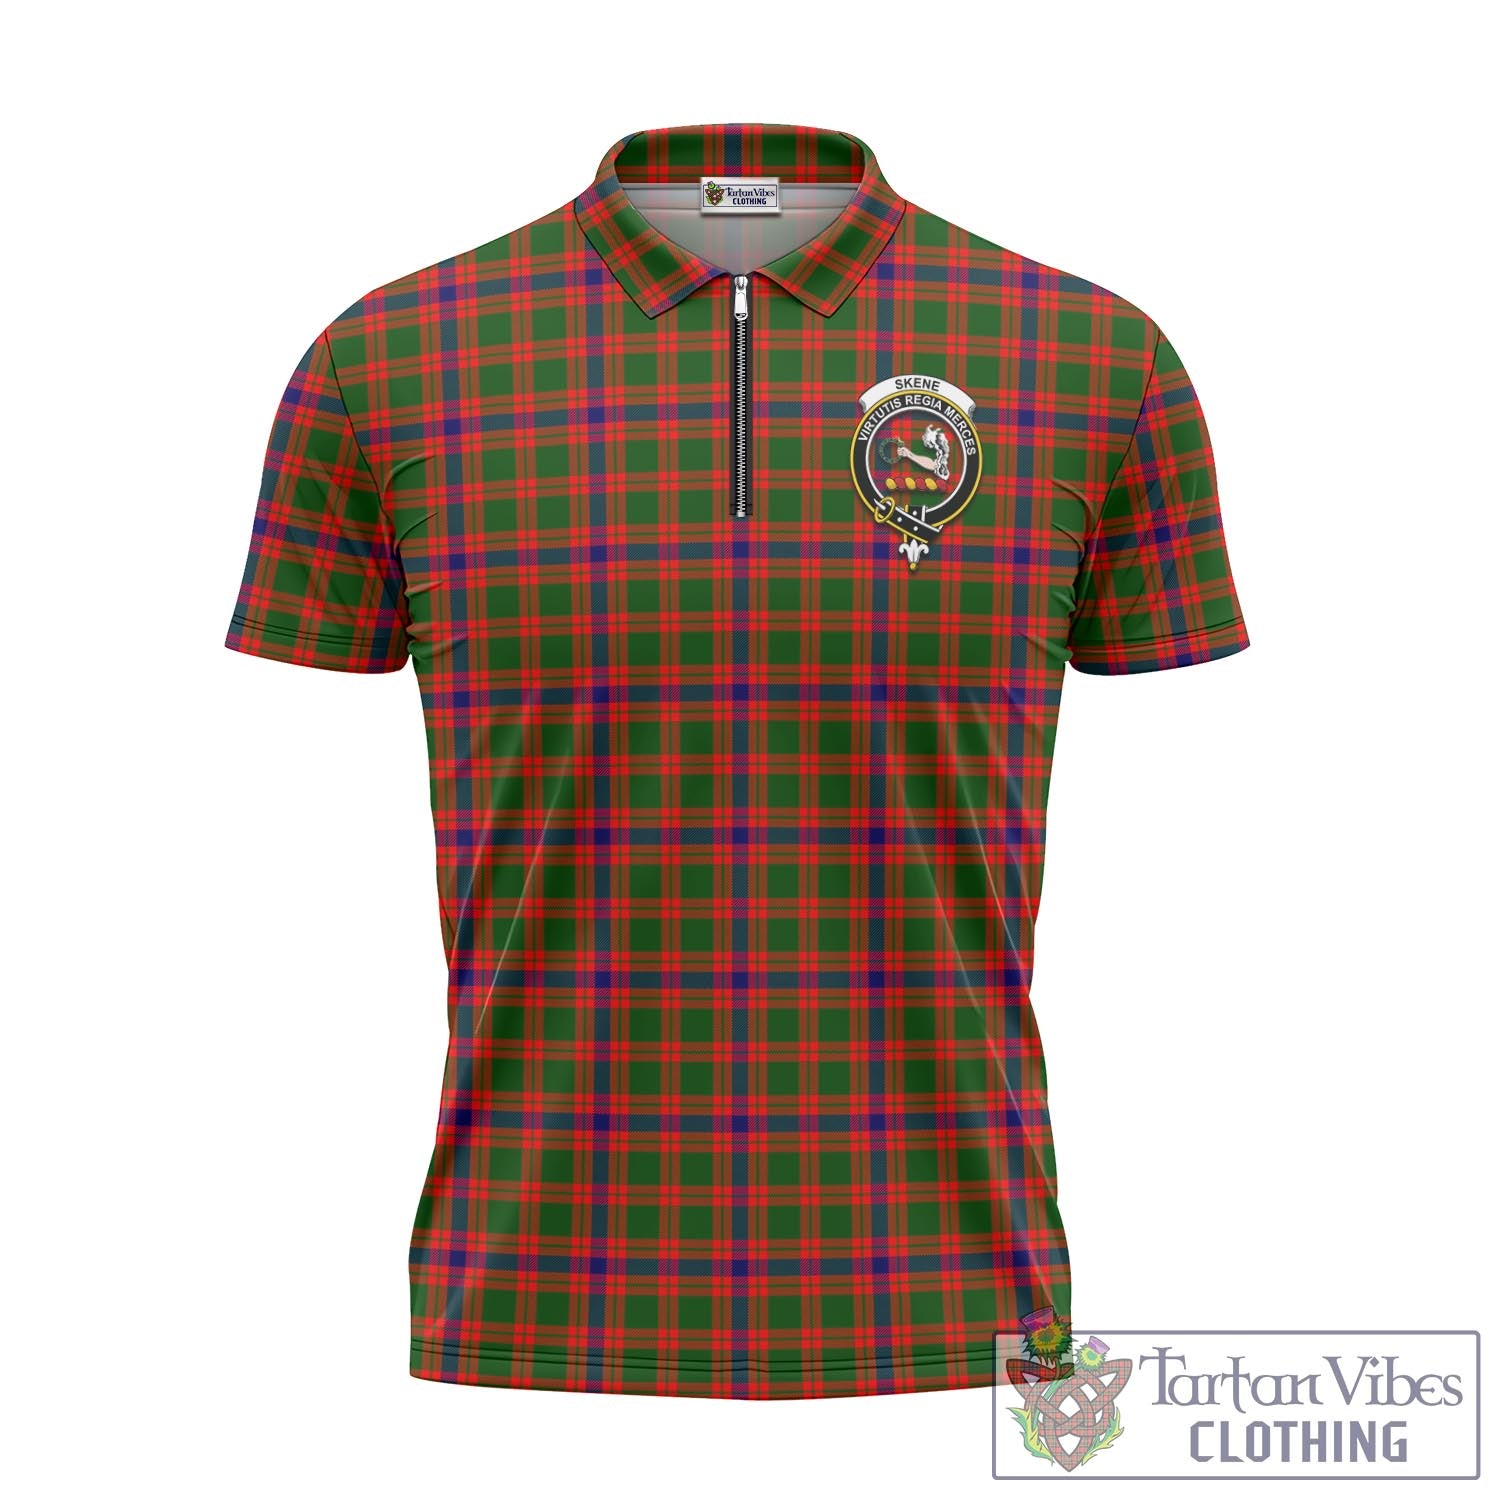 Tartan Vibes Clothing Skene Modern Tartan Zipper Polo Shirt with Family Crest